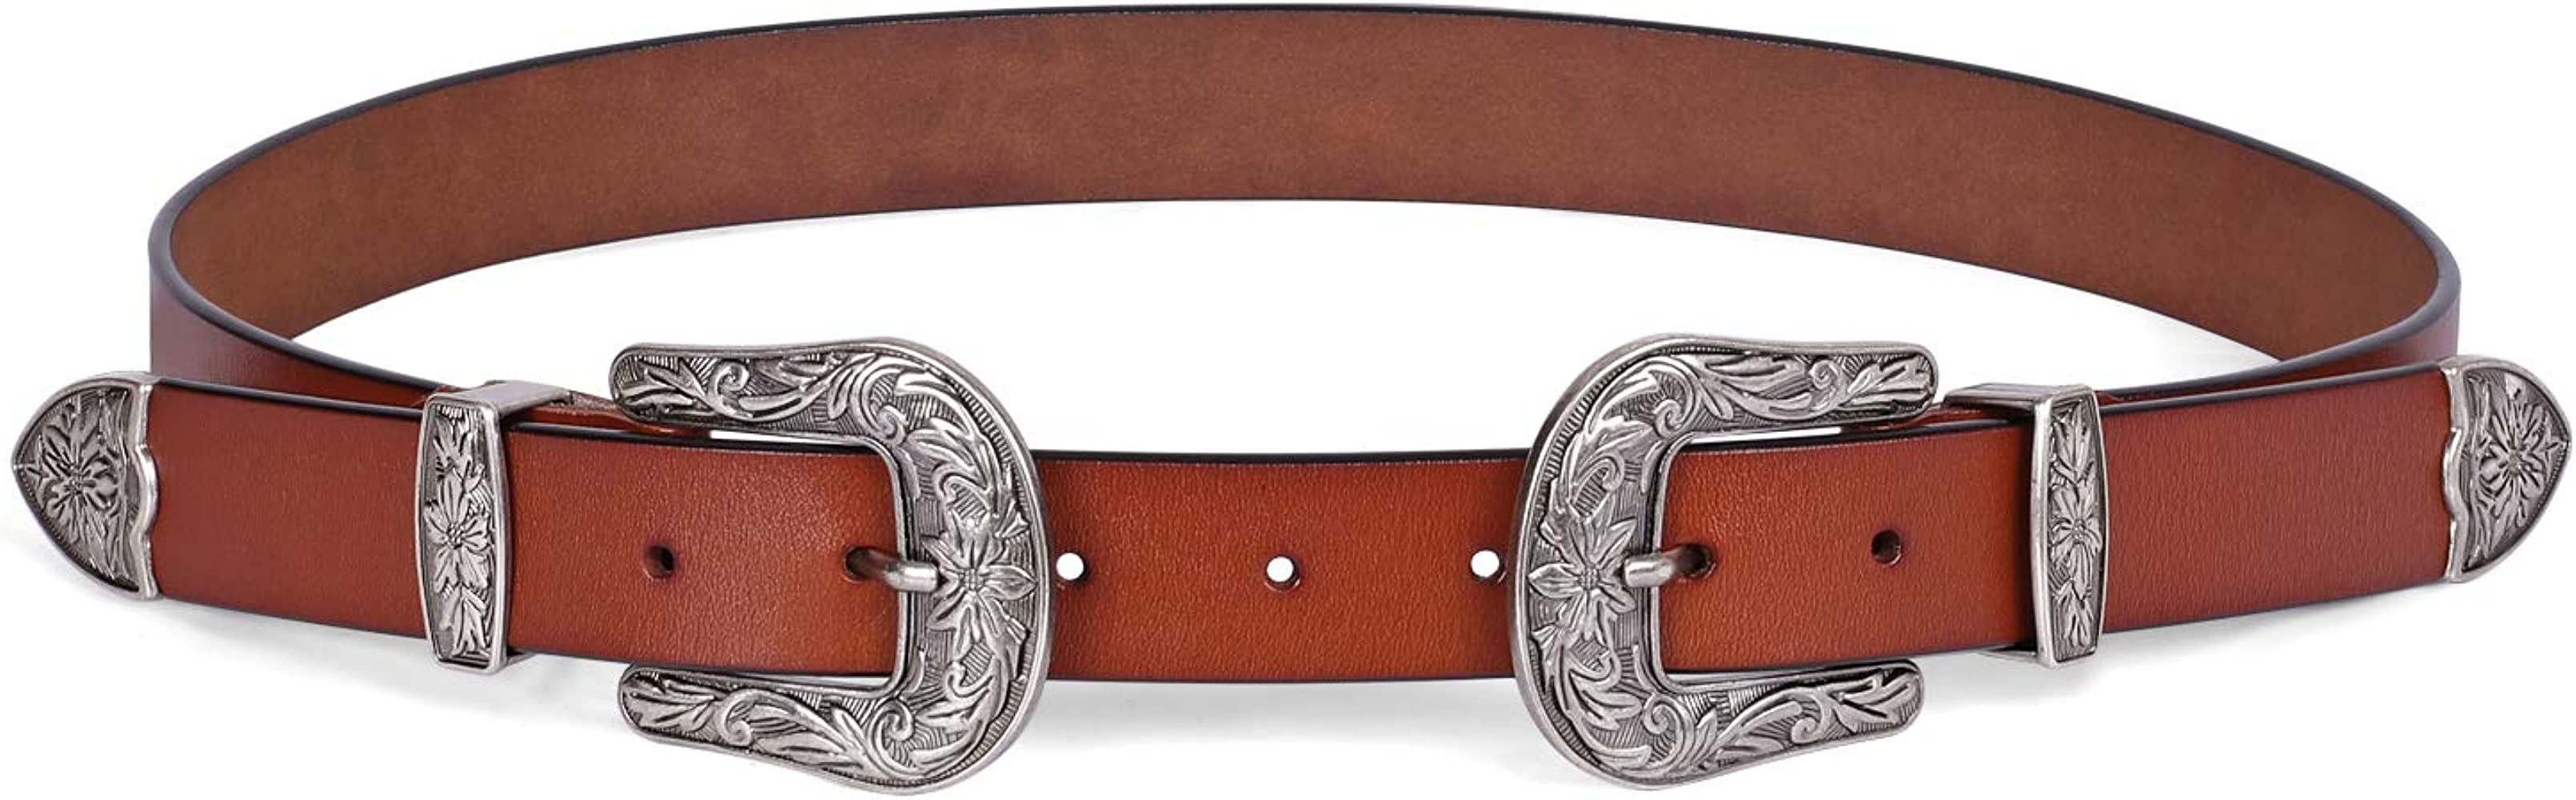 Women Leather Belts Ladies Vintage Western Design Black Waist Belt for Pants Dresses | Amazon (US)